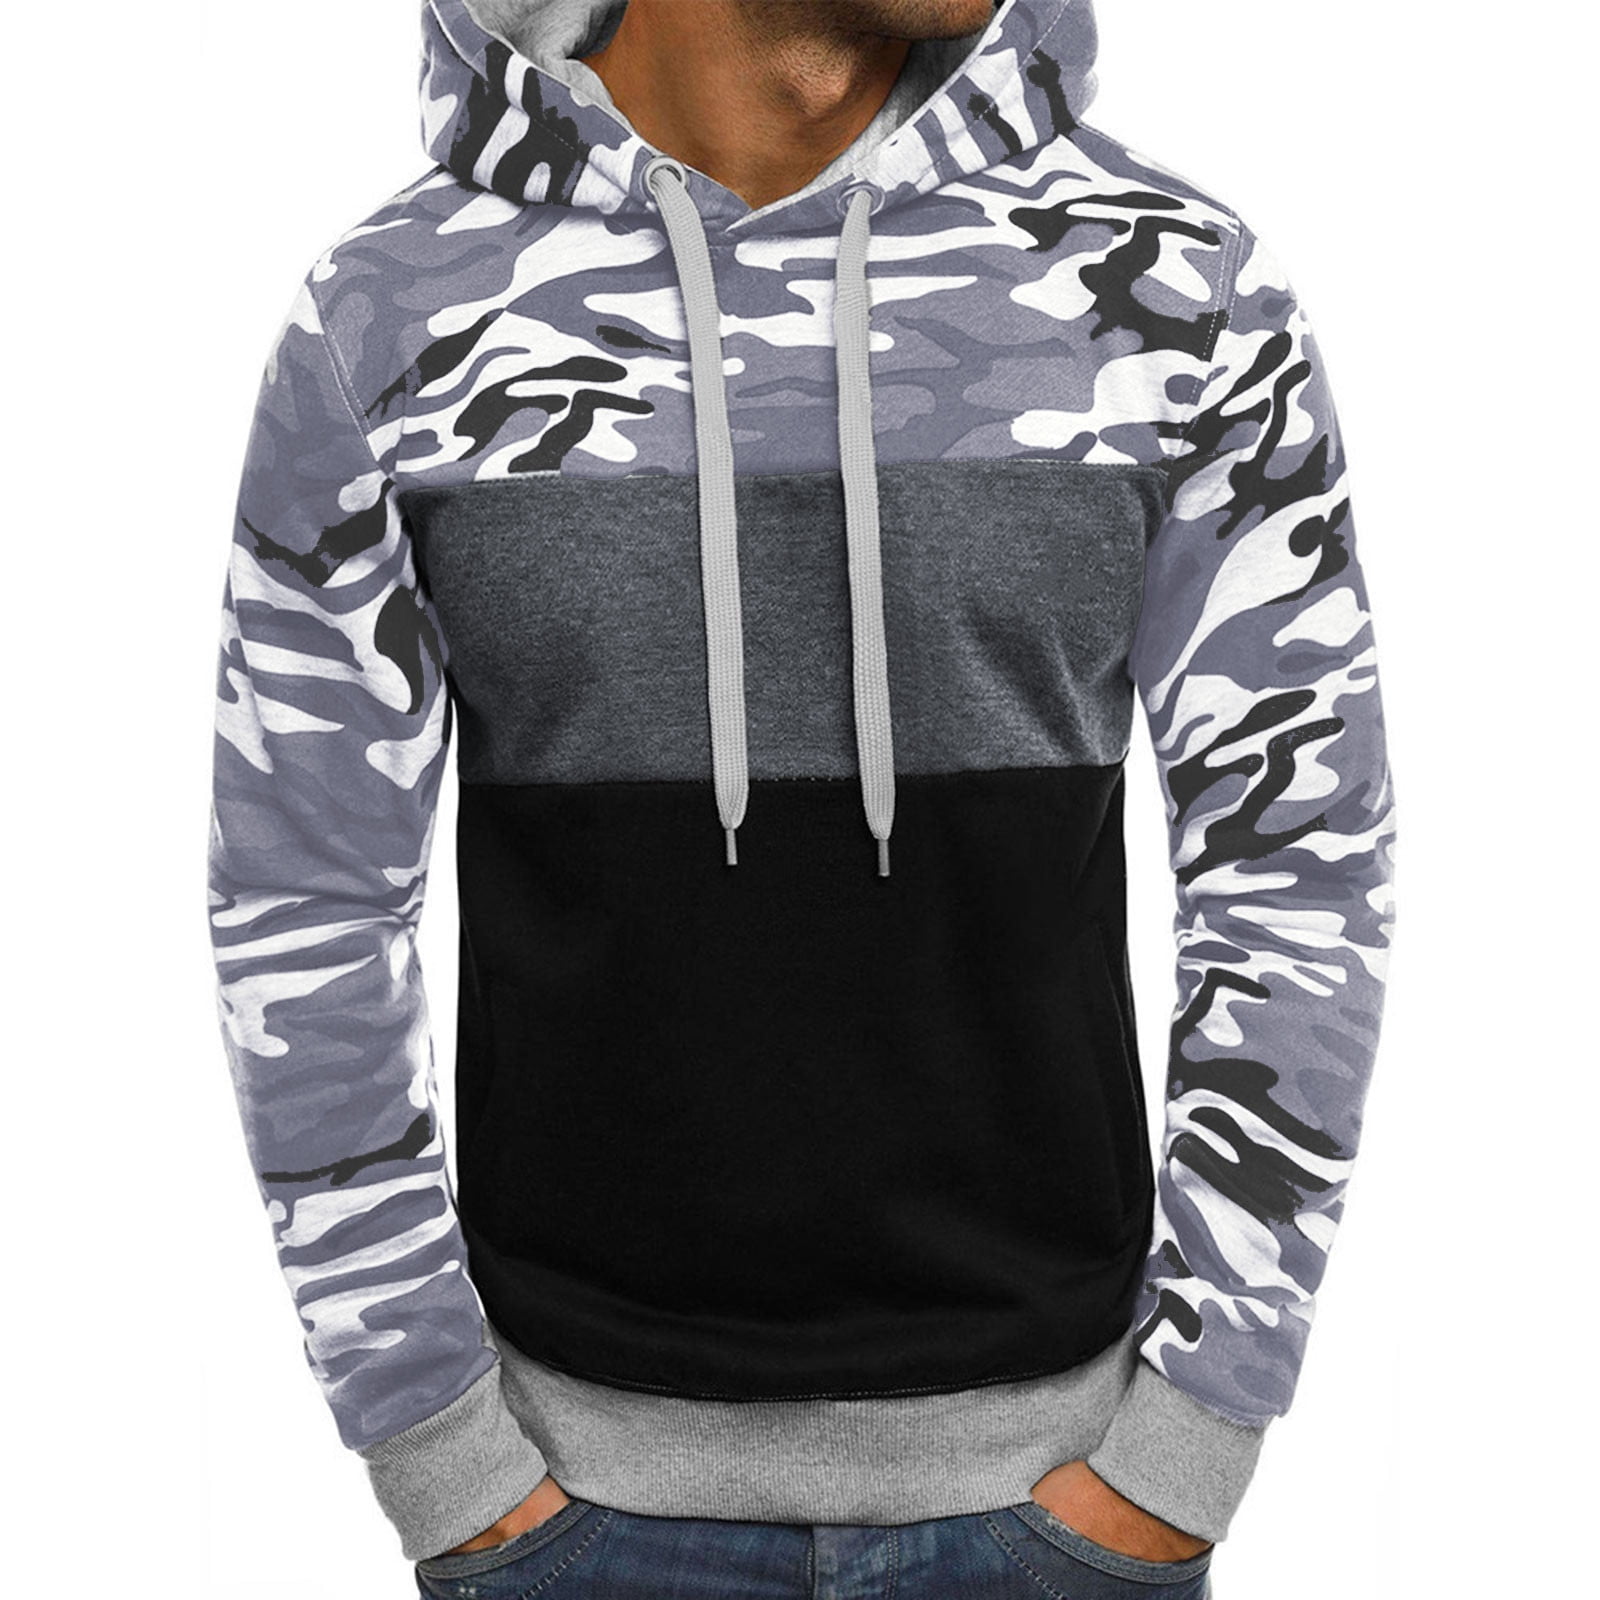 Graphic Hoodies for Men Long S1eeve Hoodies Sweatshirts Camouflage ...